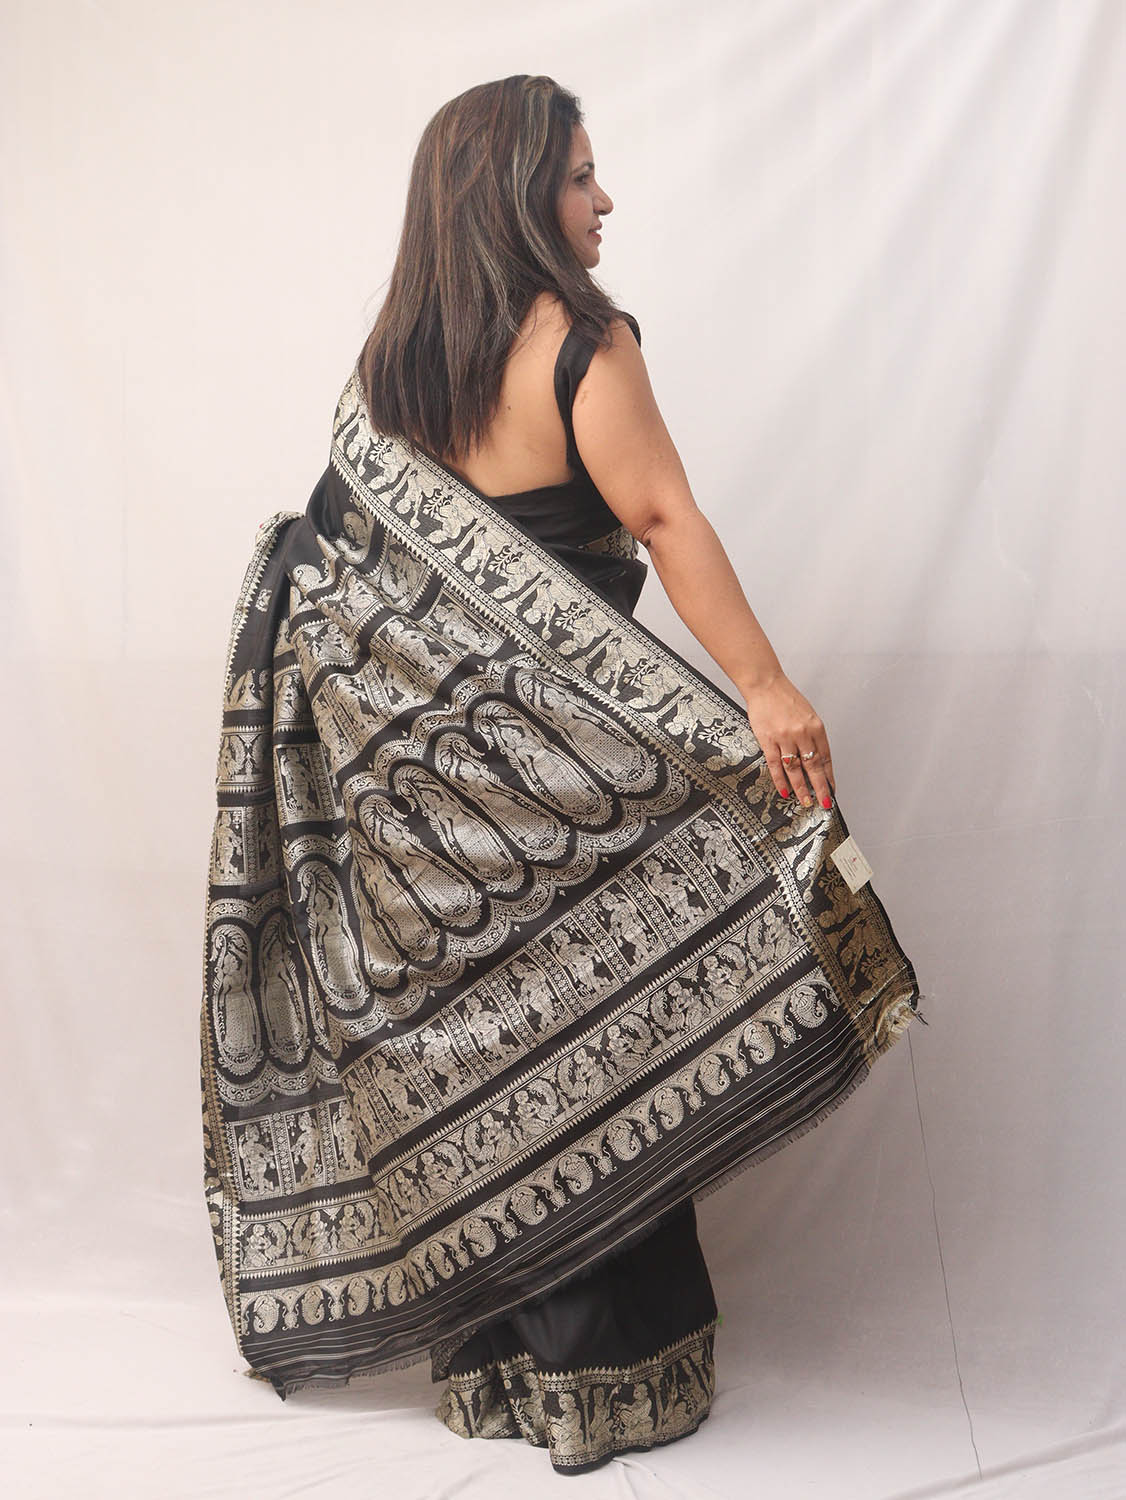 Exquisite Black Swarnachari Pure Silk Saree - Handloom Woven - Luxurion World